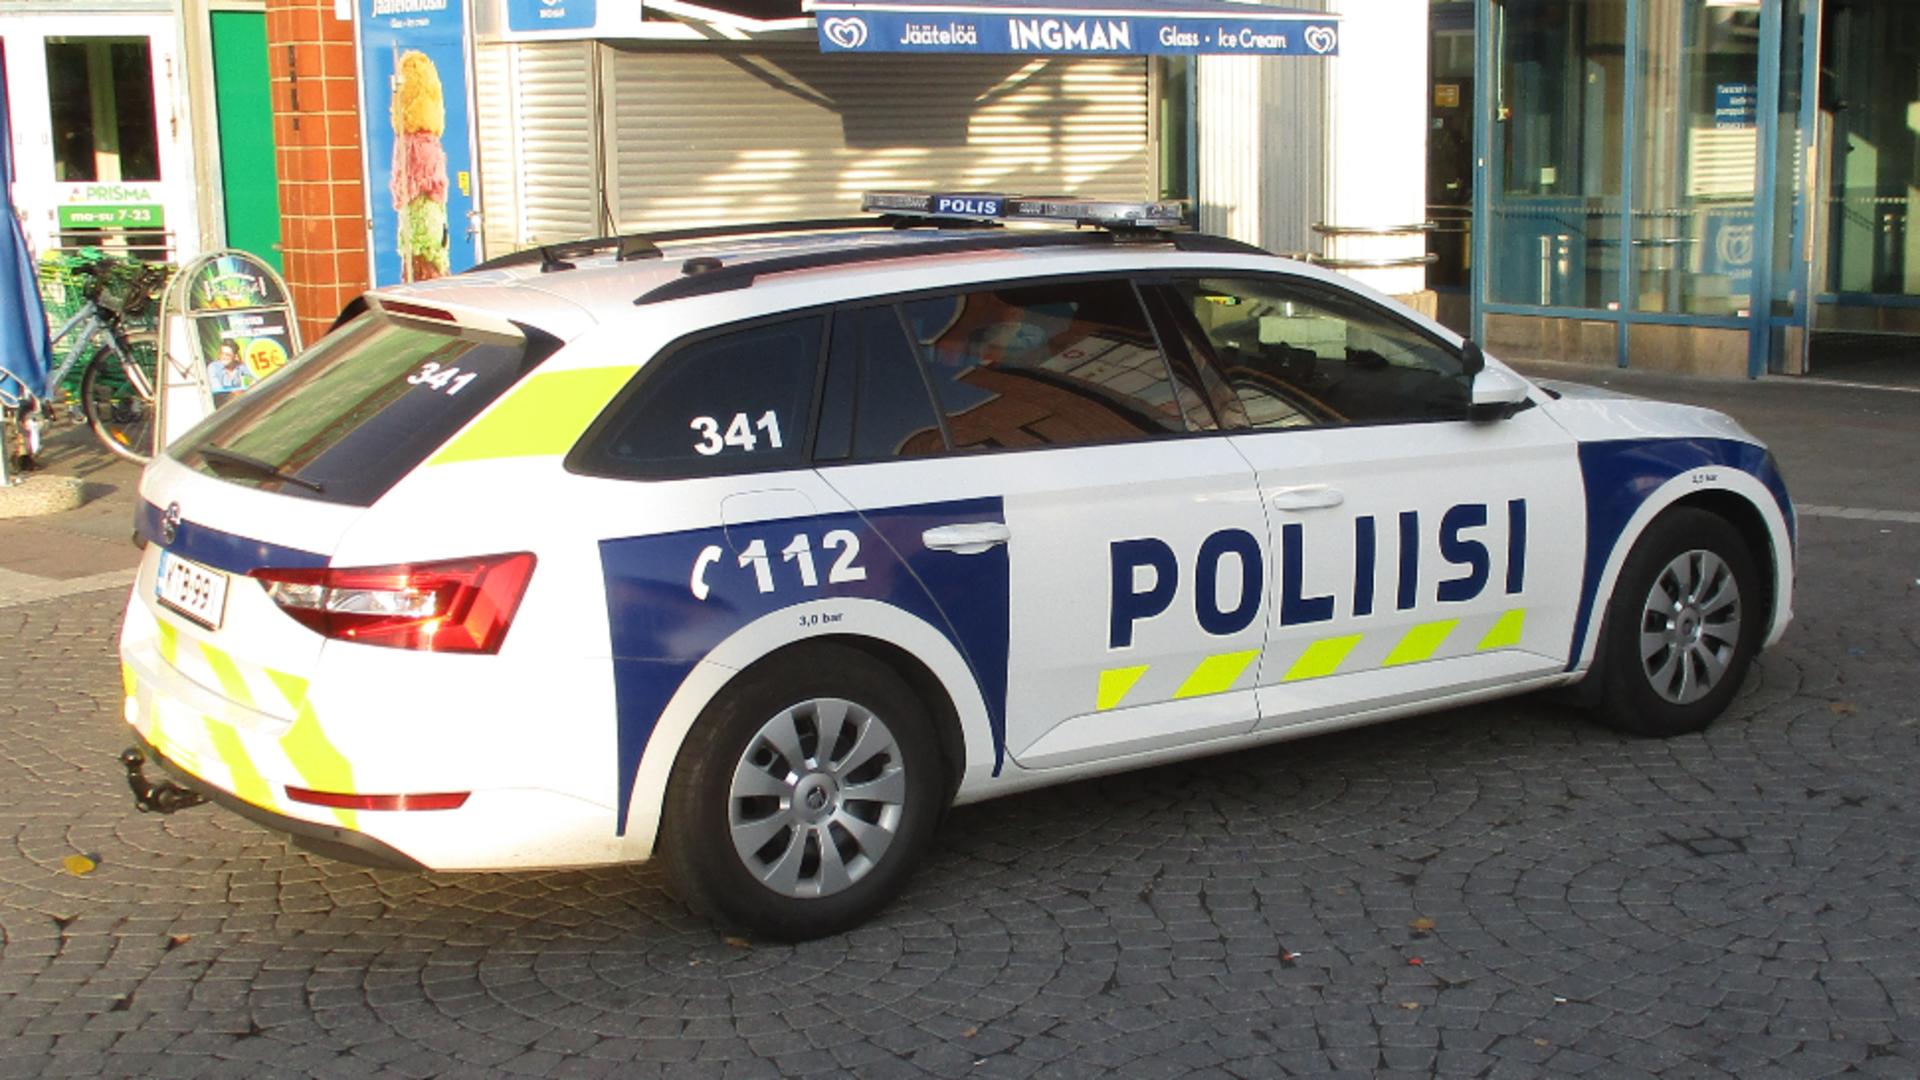 Poliție Finlanda/ Wikipedia